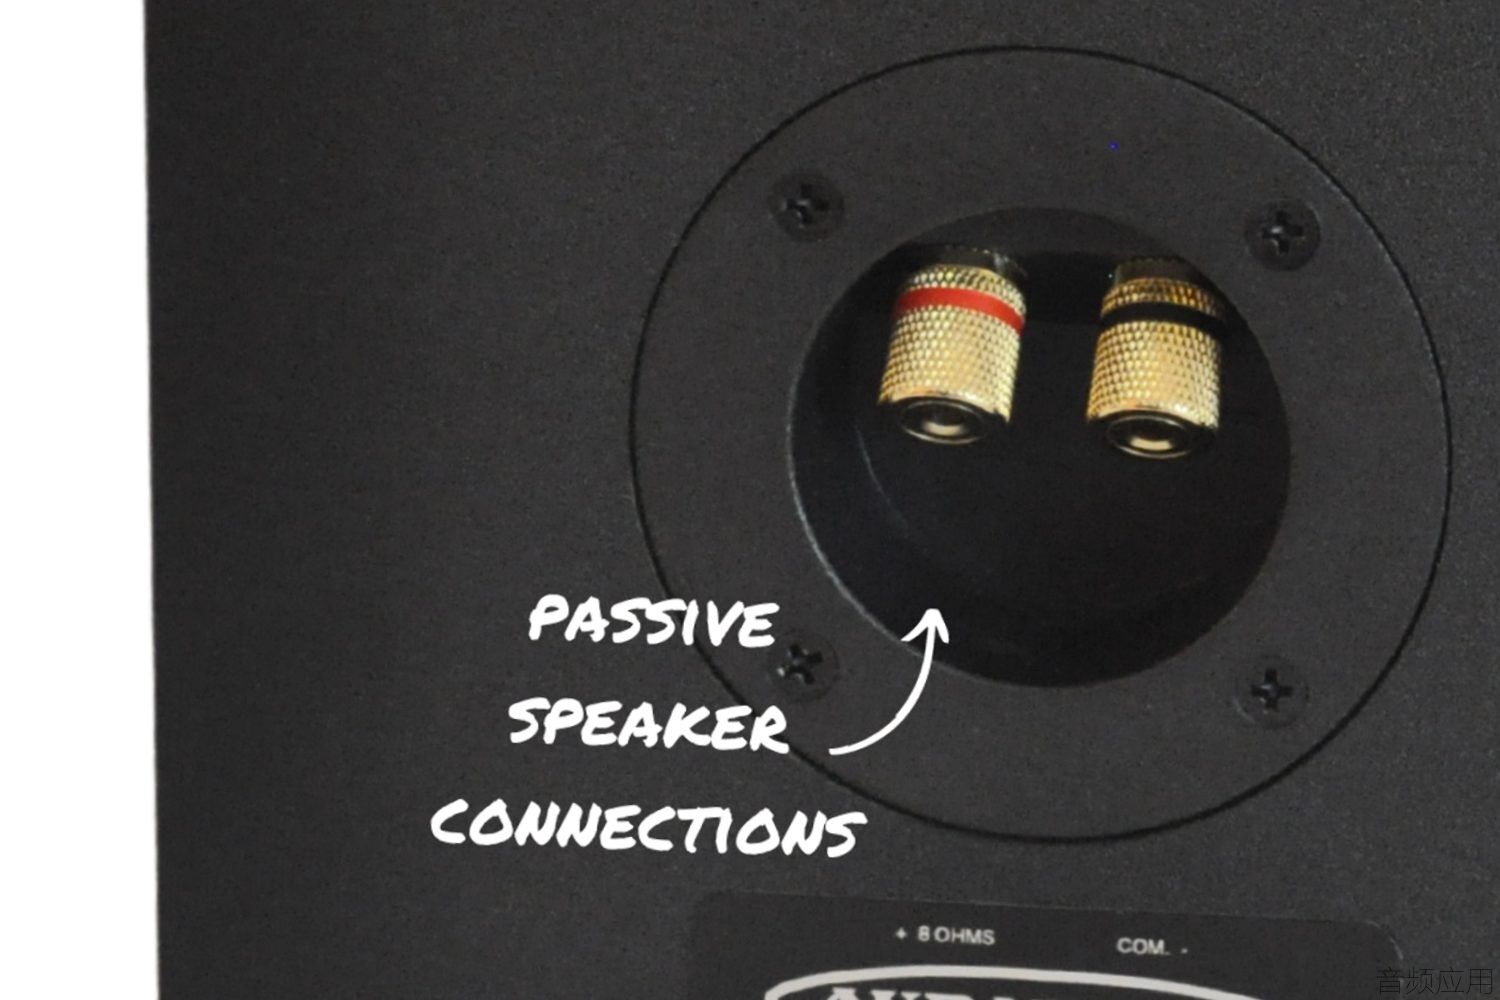 Passive-speaker-connections-1024x683.jpg